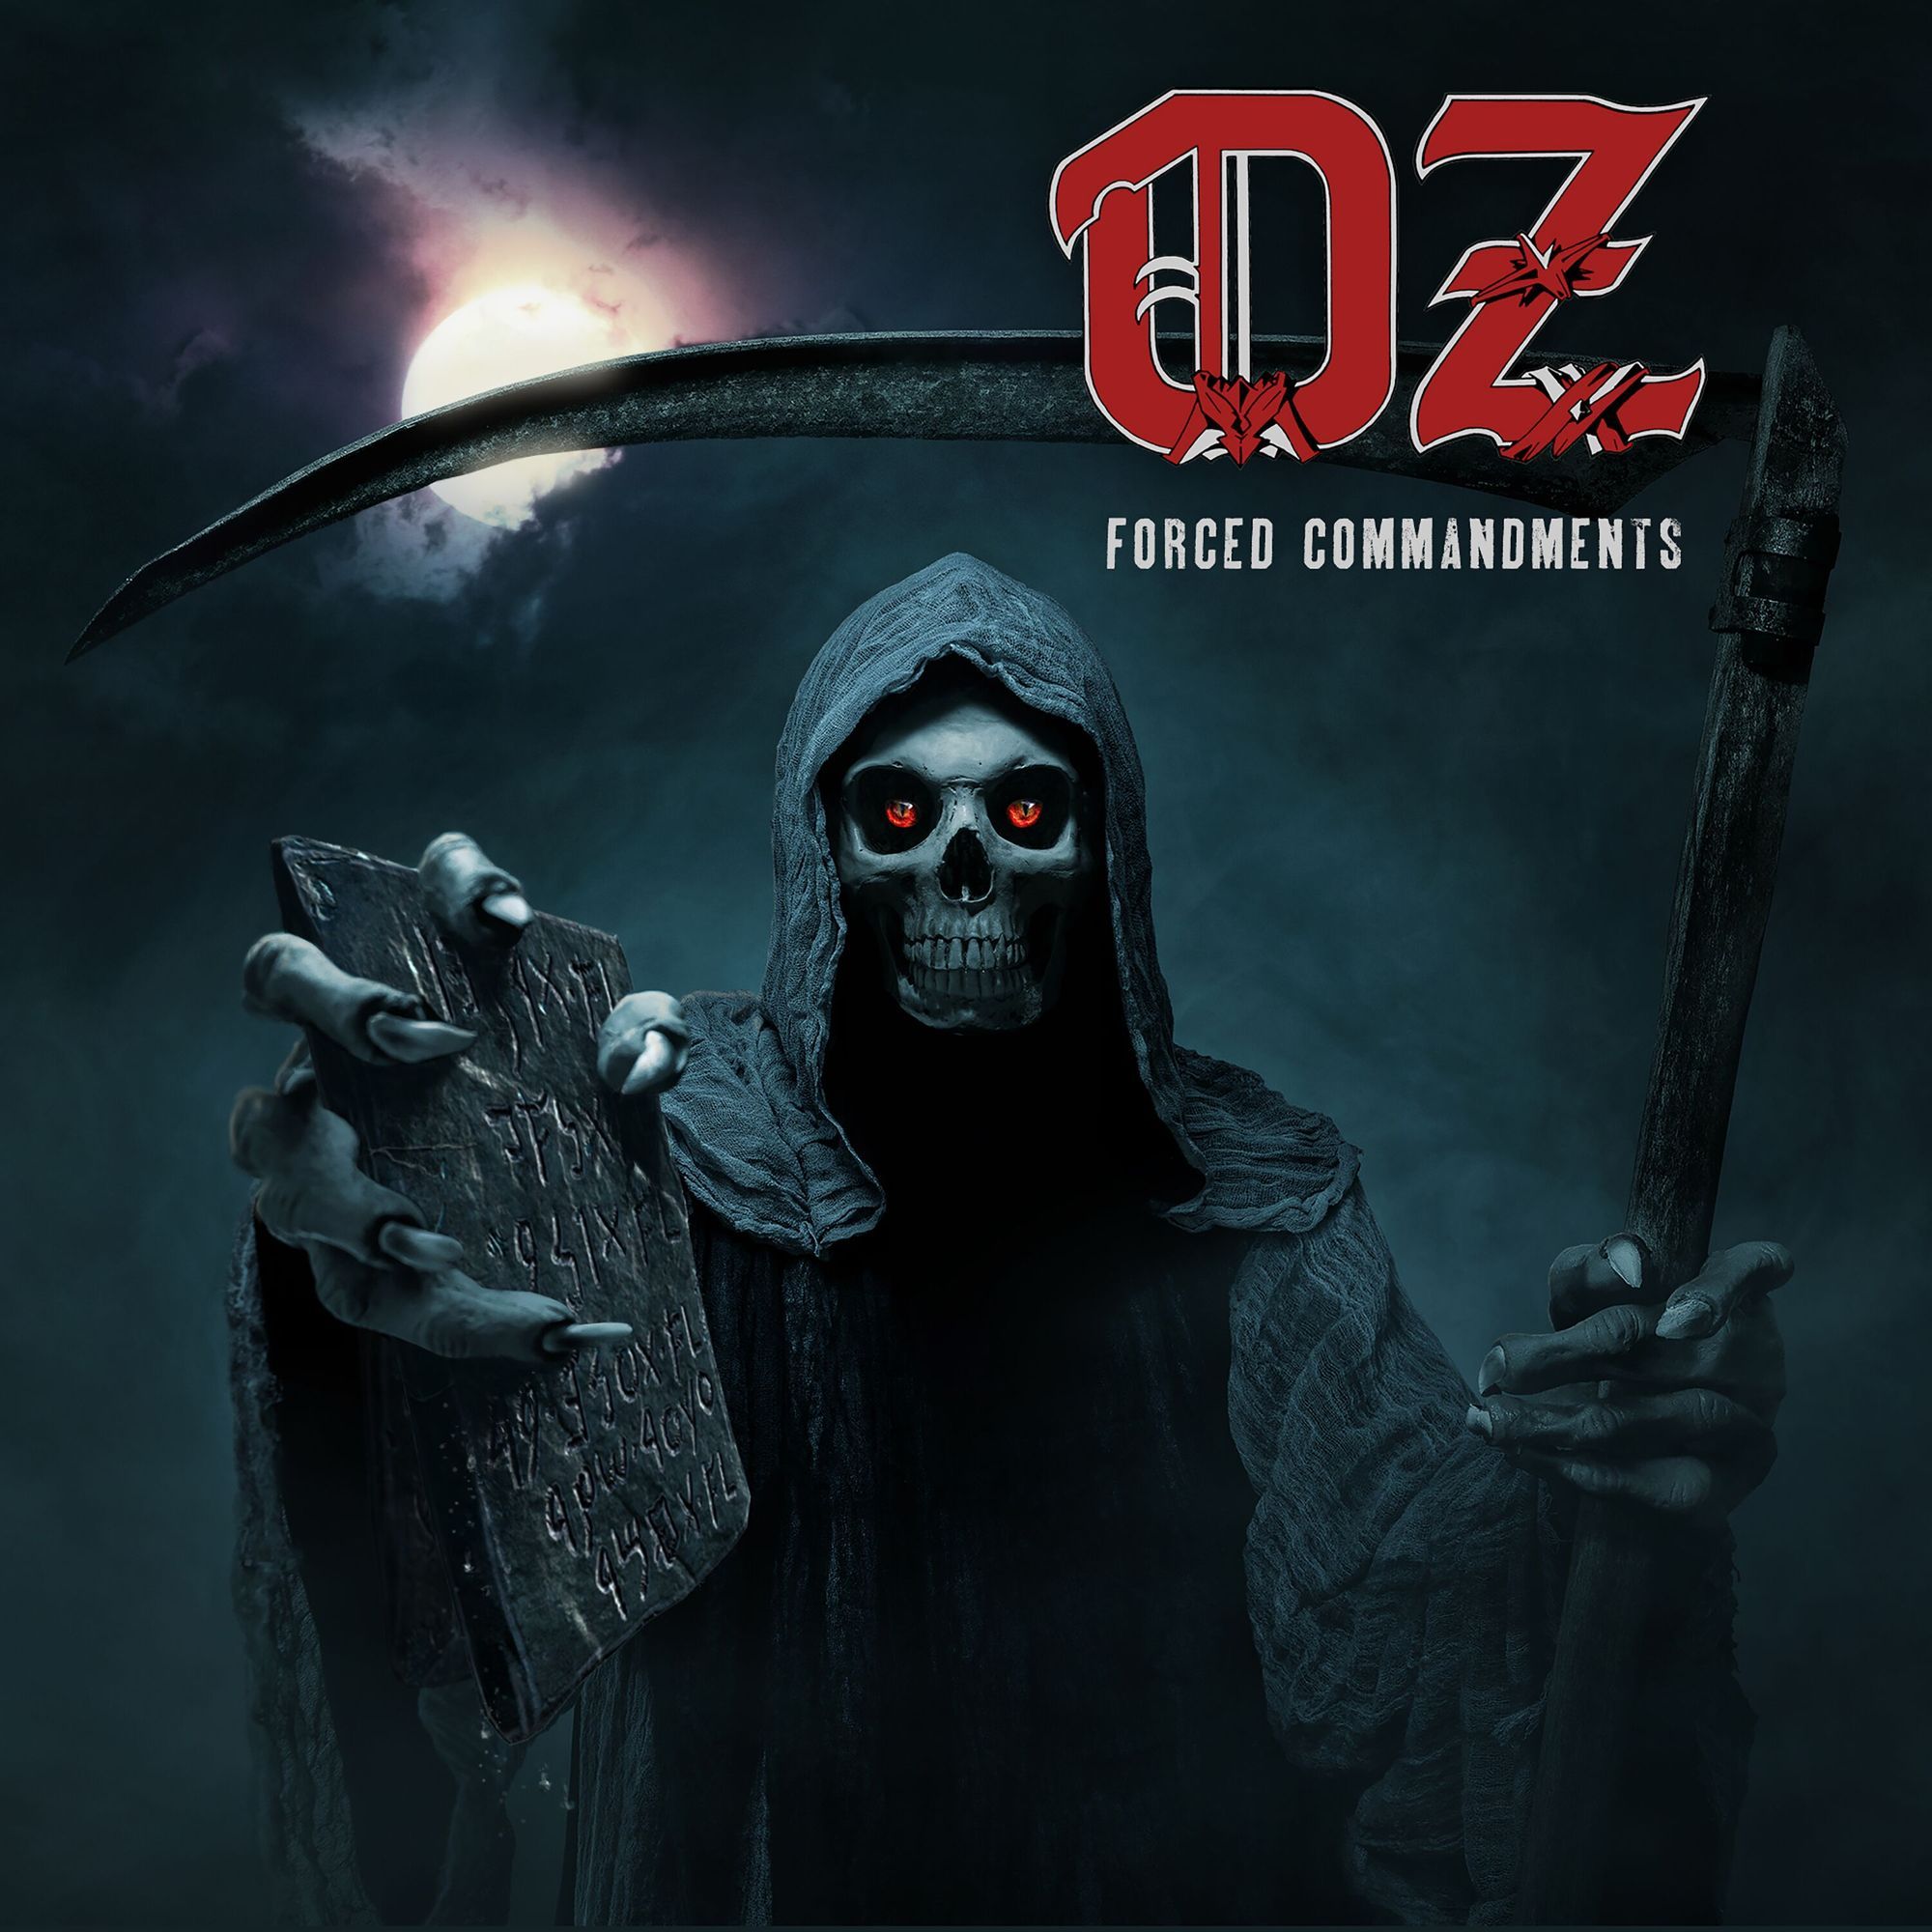 Oz - Break Out (lyric video)